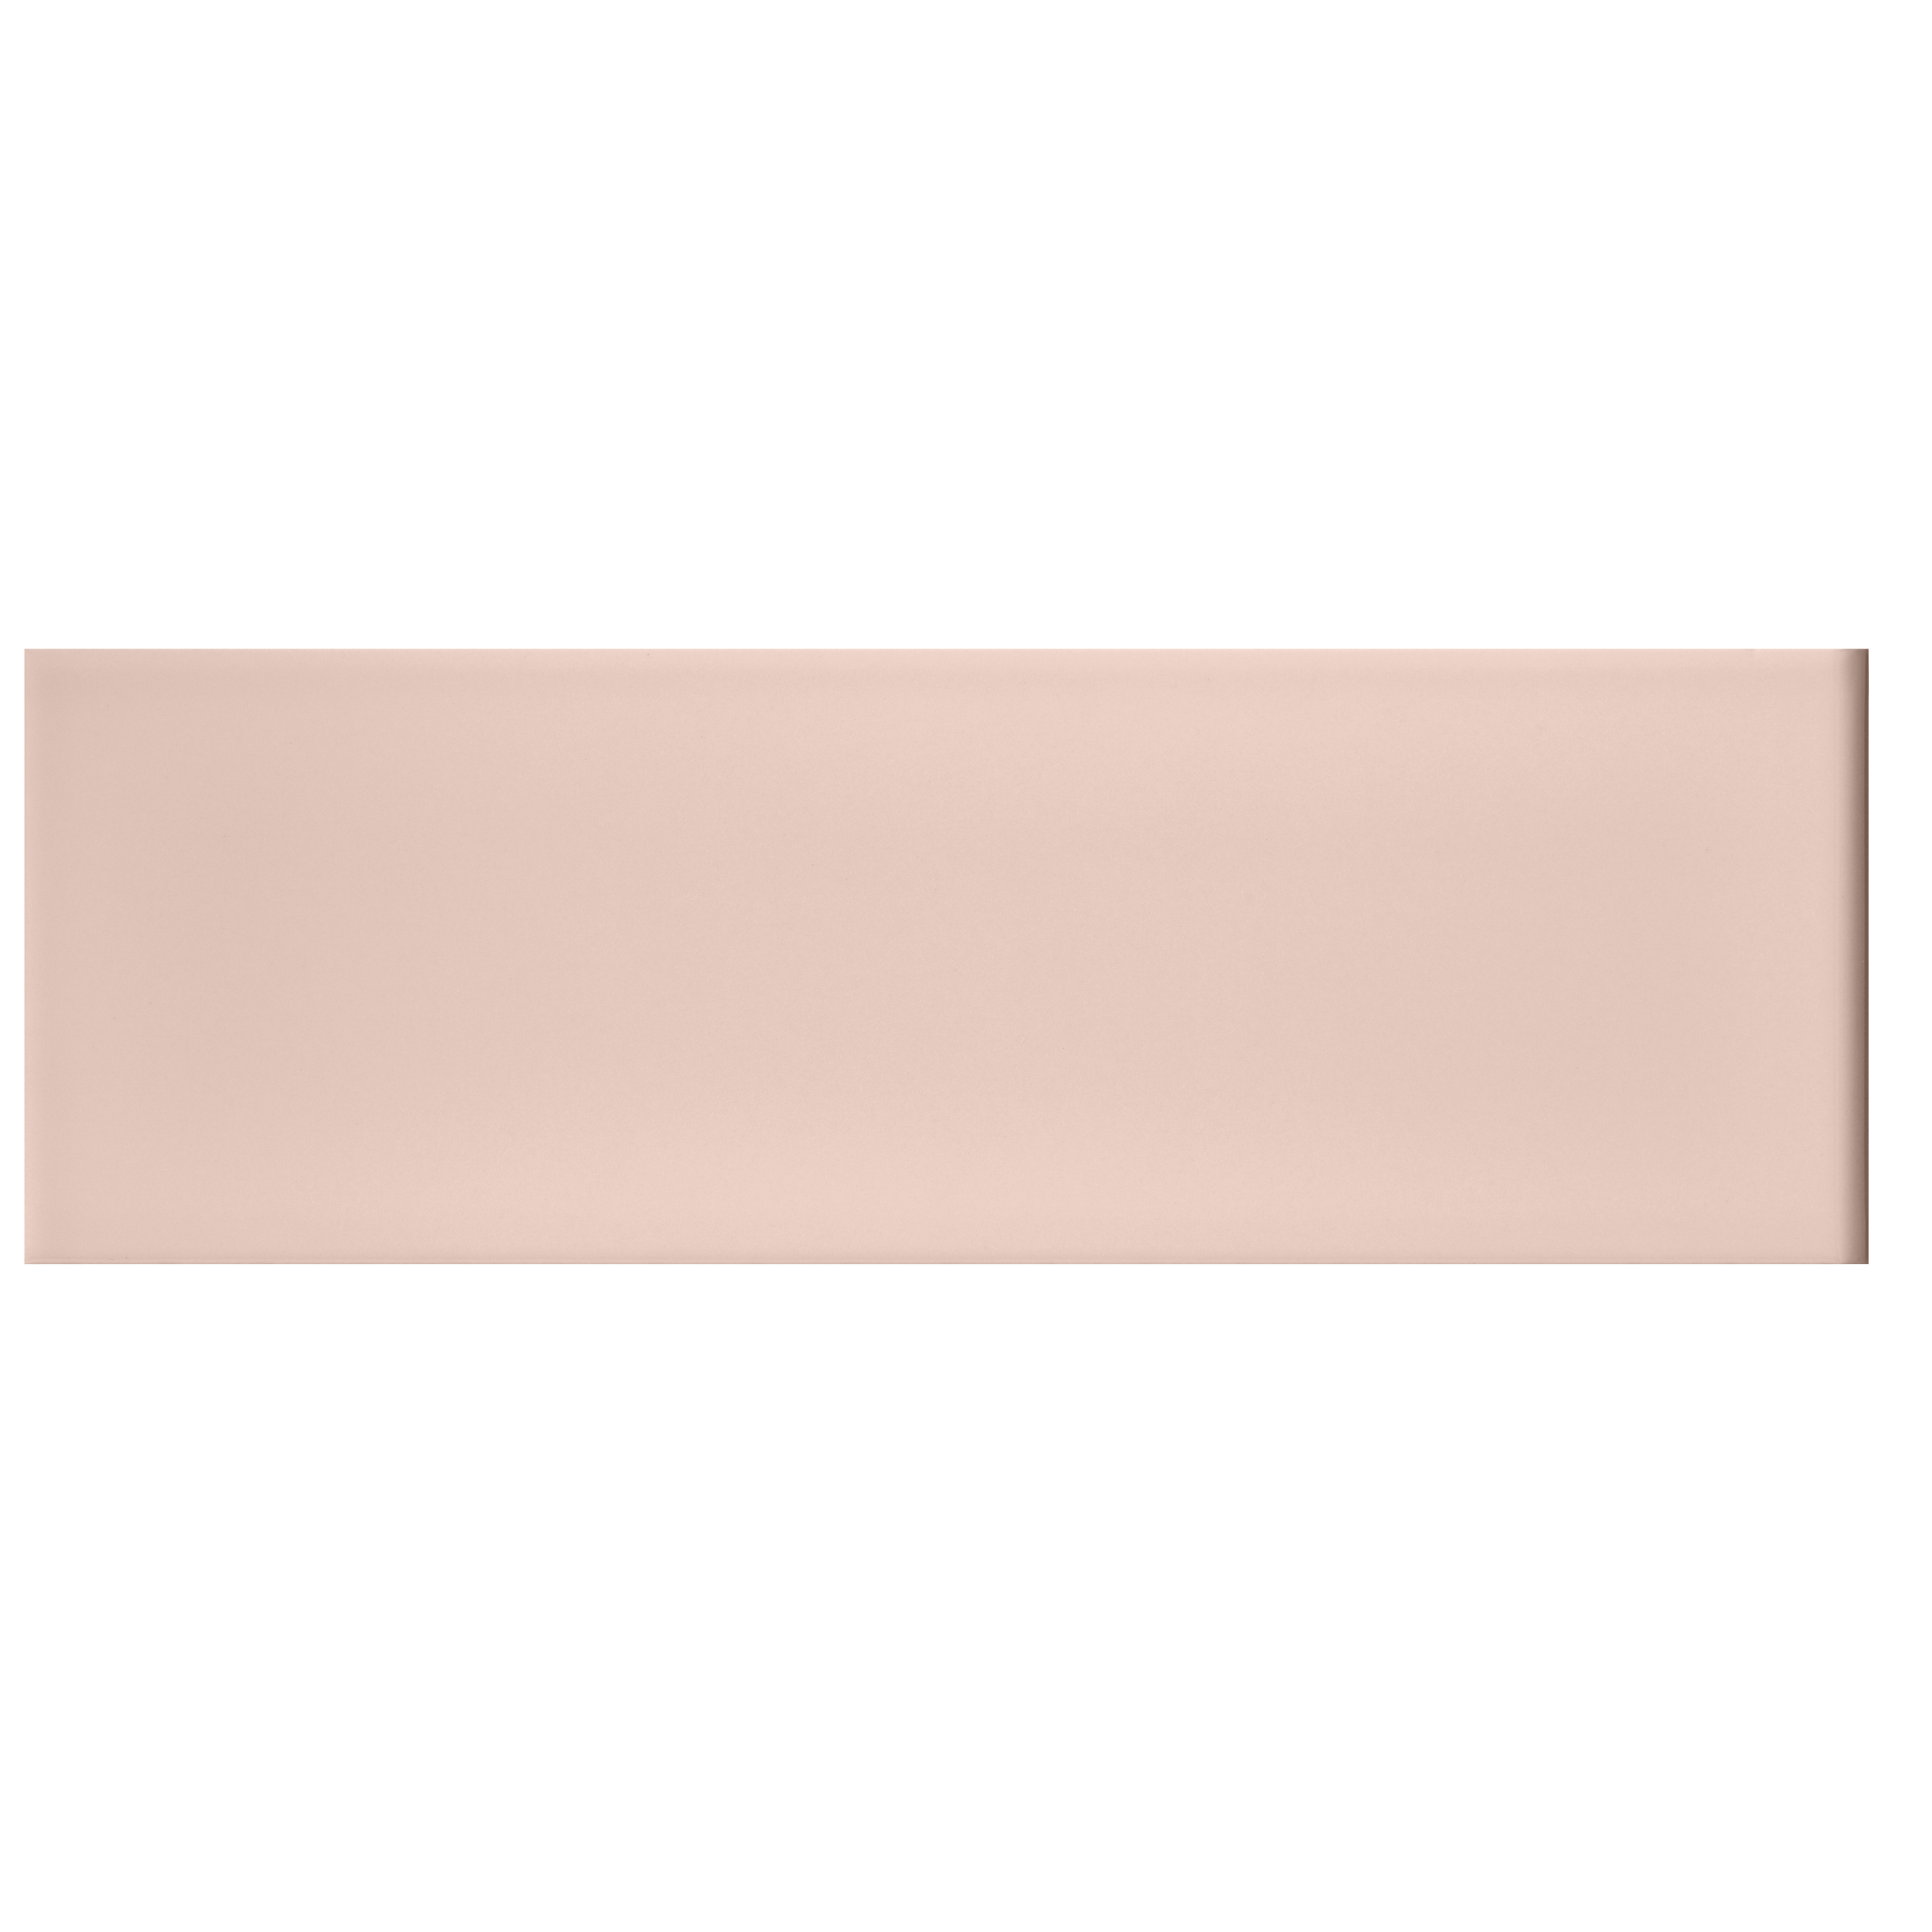 Imperial Pink Gls (072) RES 10x30cm